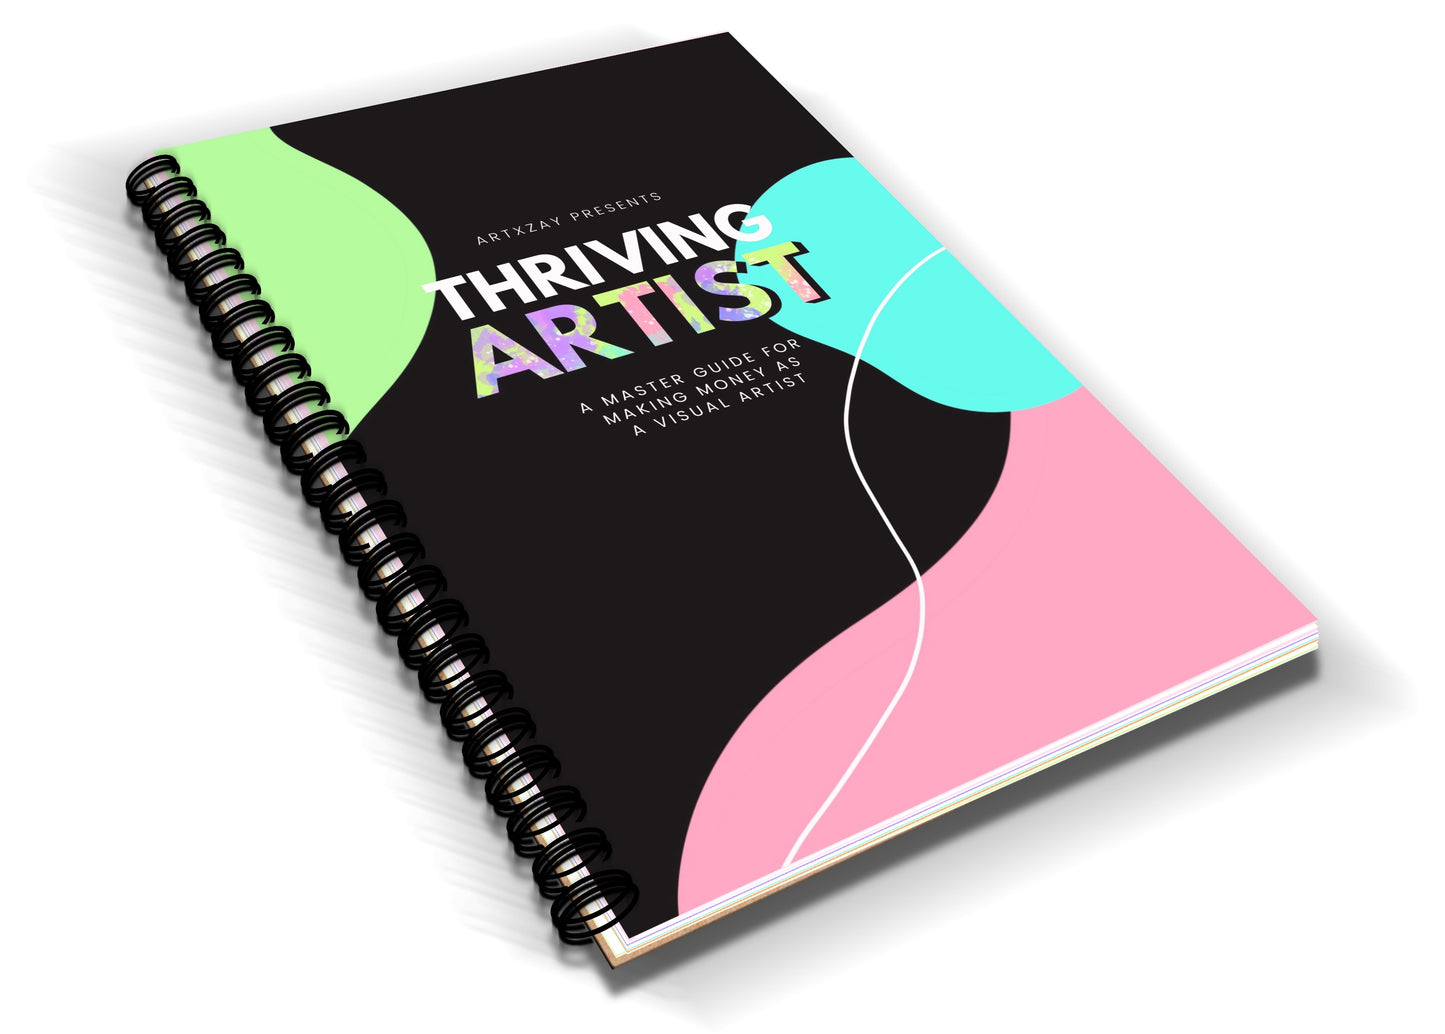 Thriving Artist Book